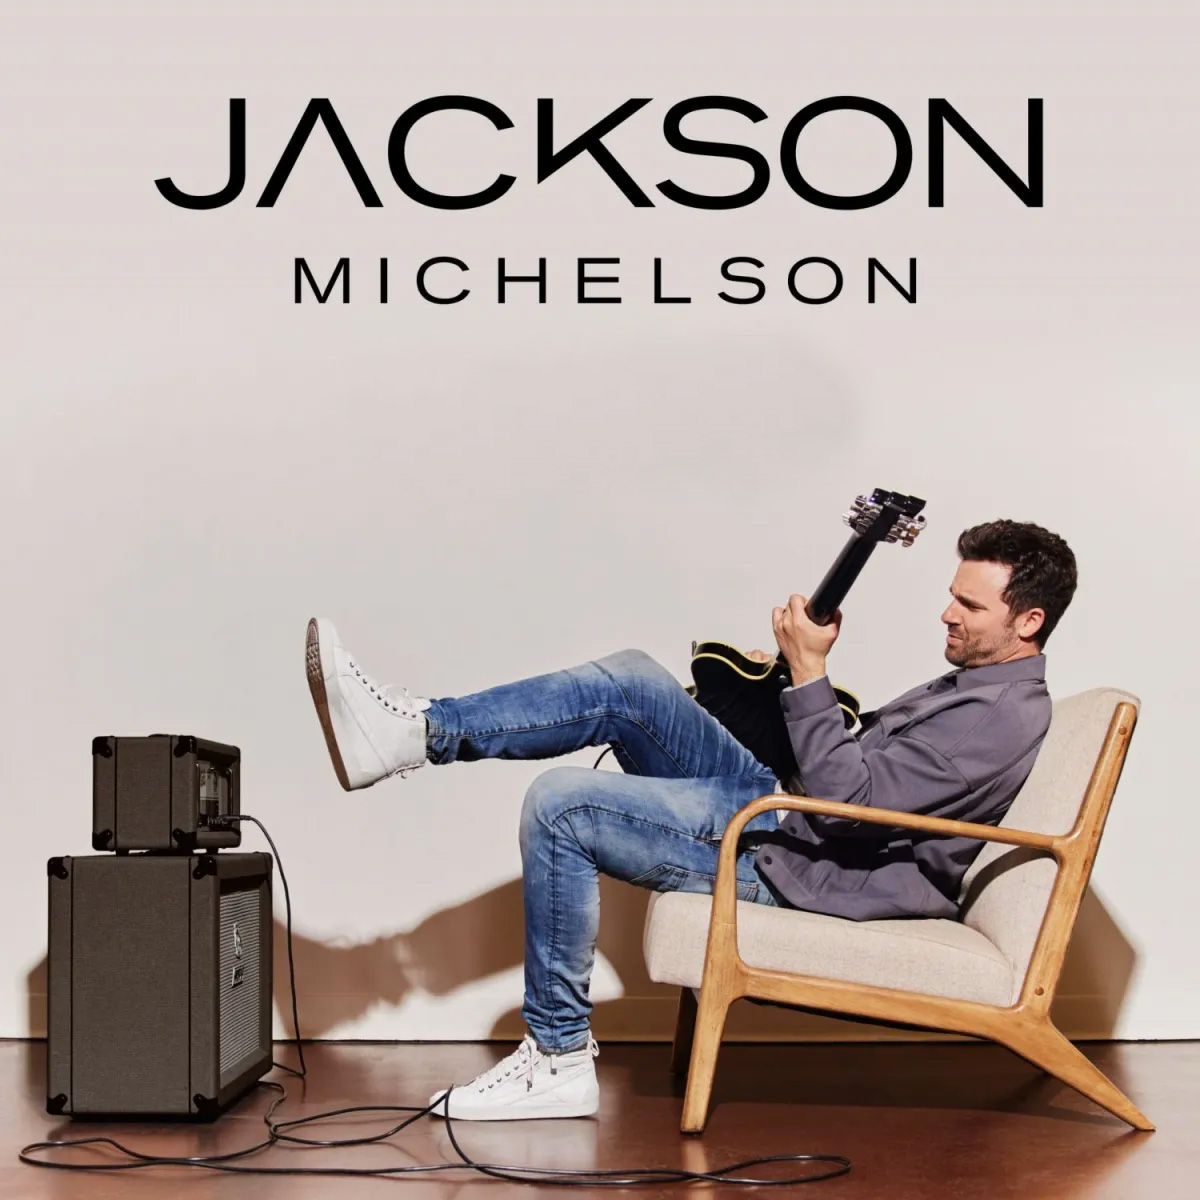 Jackson Michelson